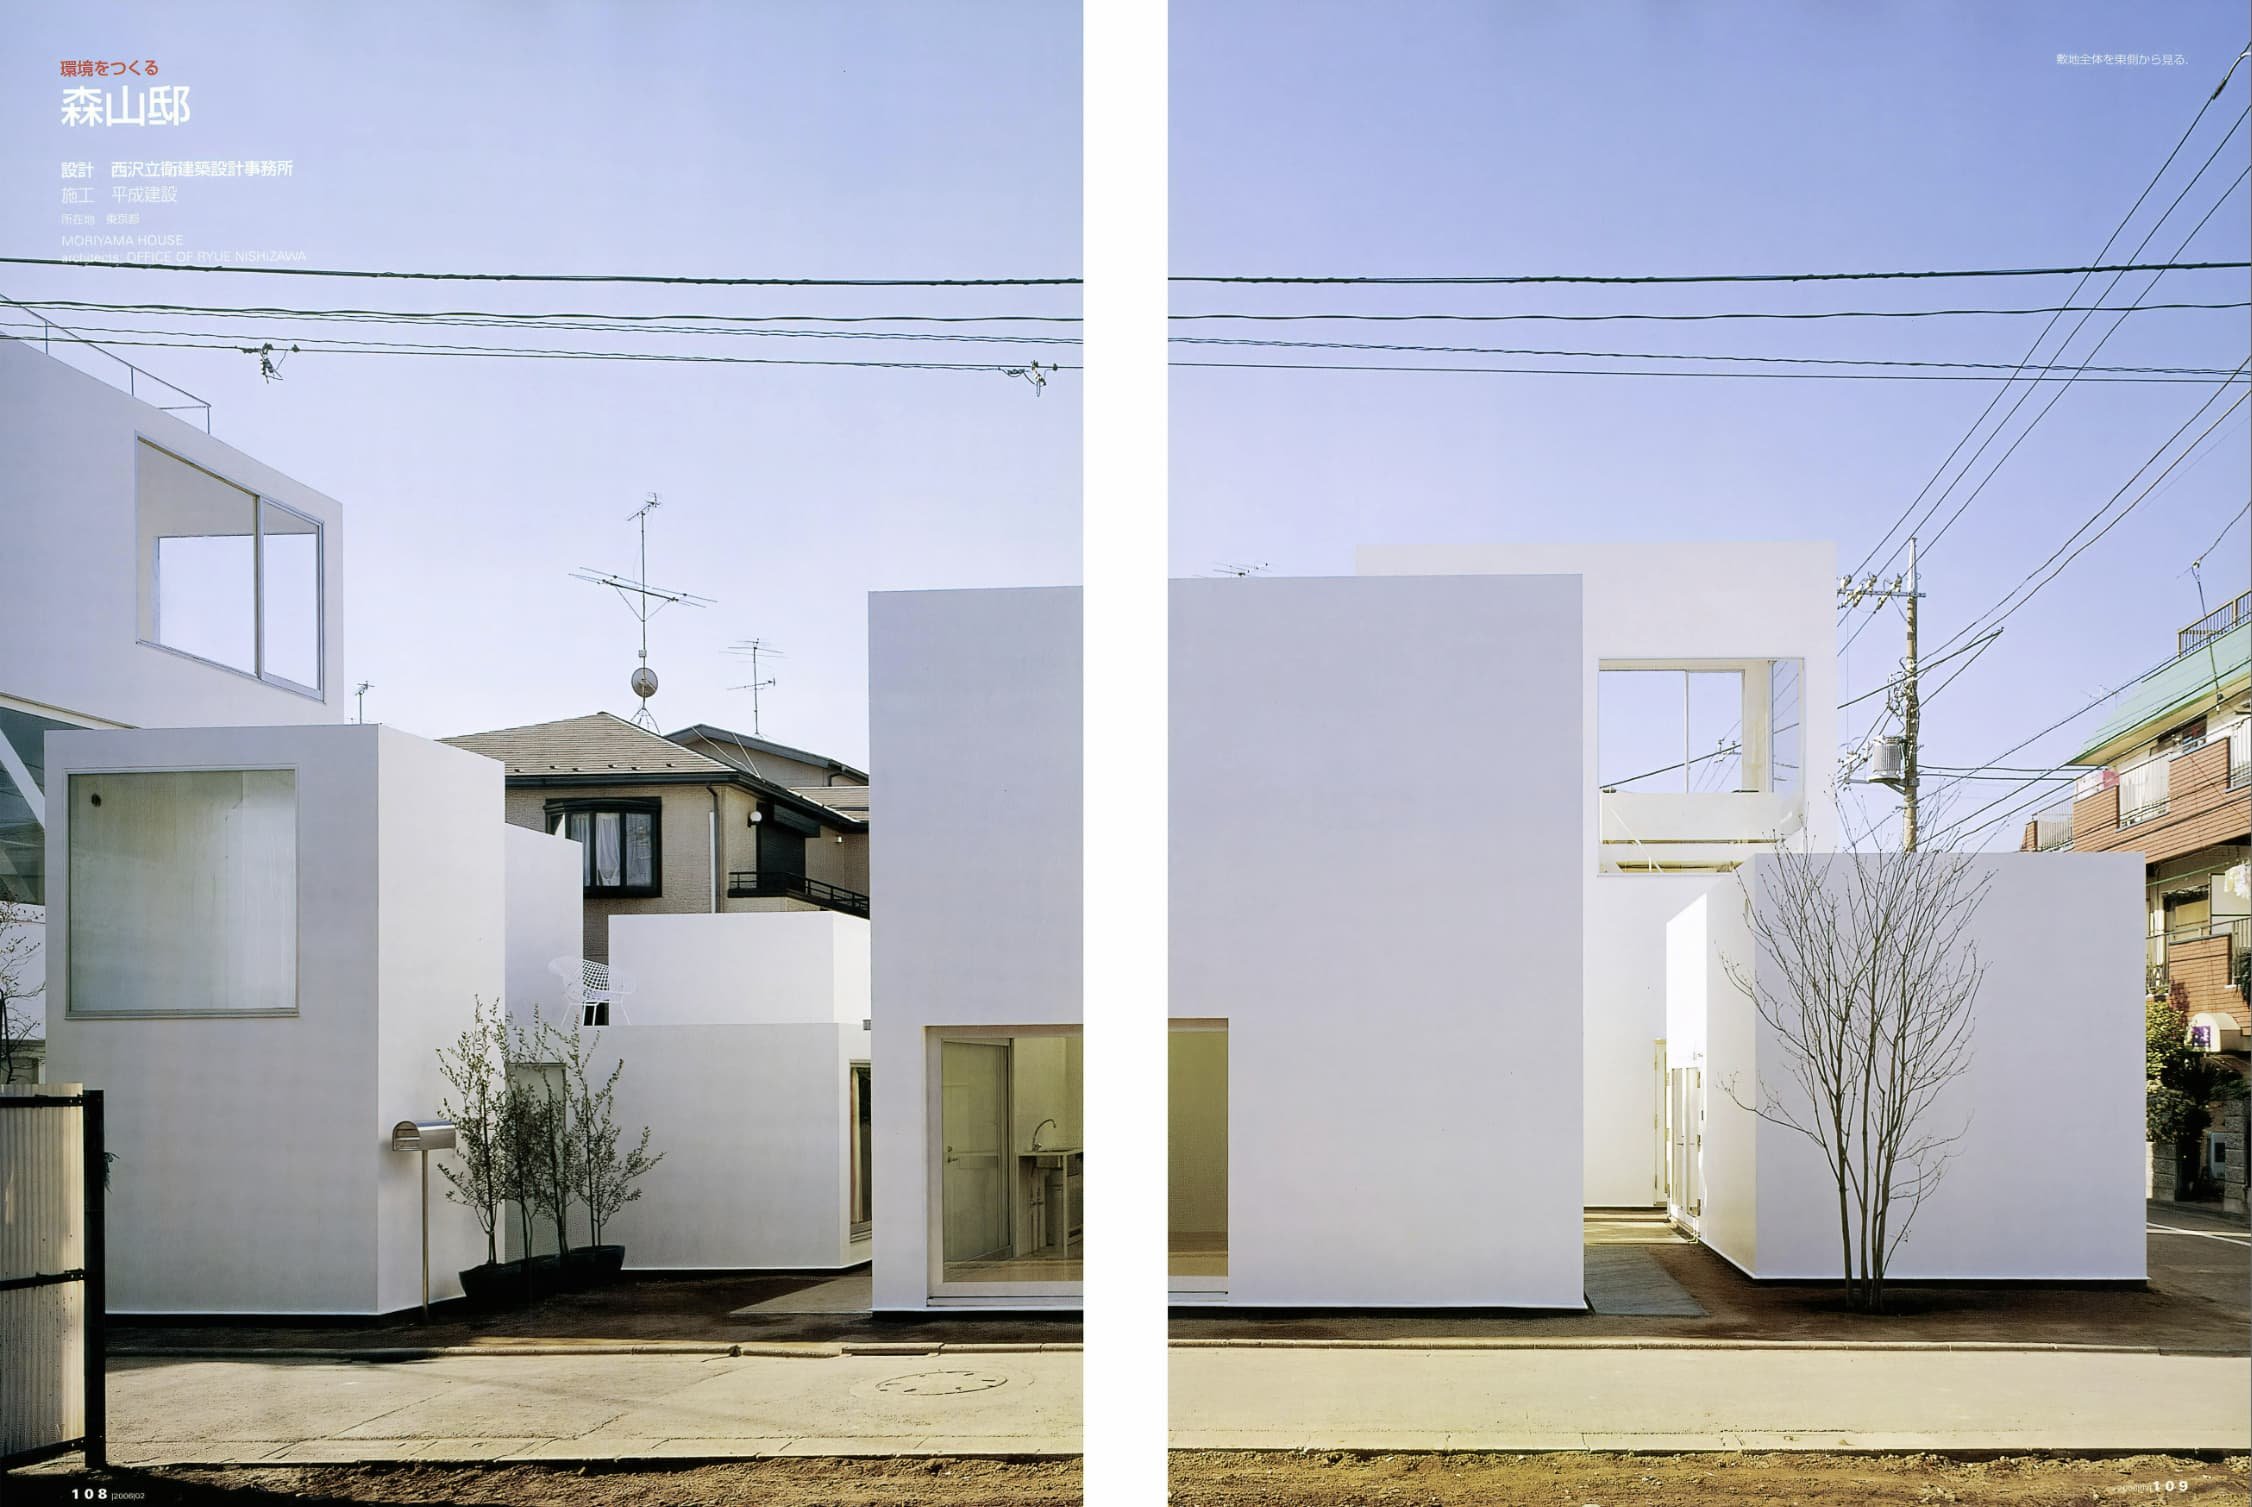 新建築 - New Architecture 200602 - Moriyama House.jpg